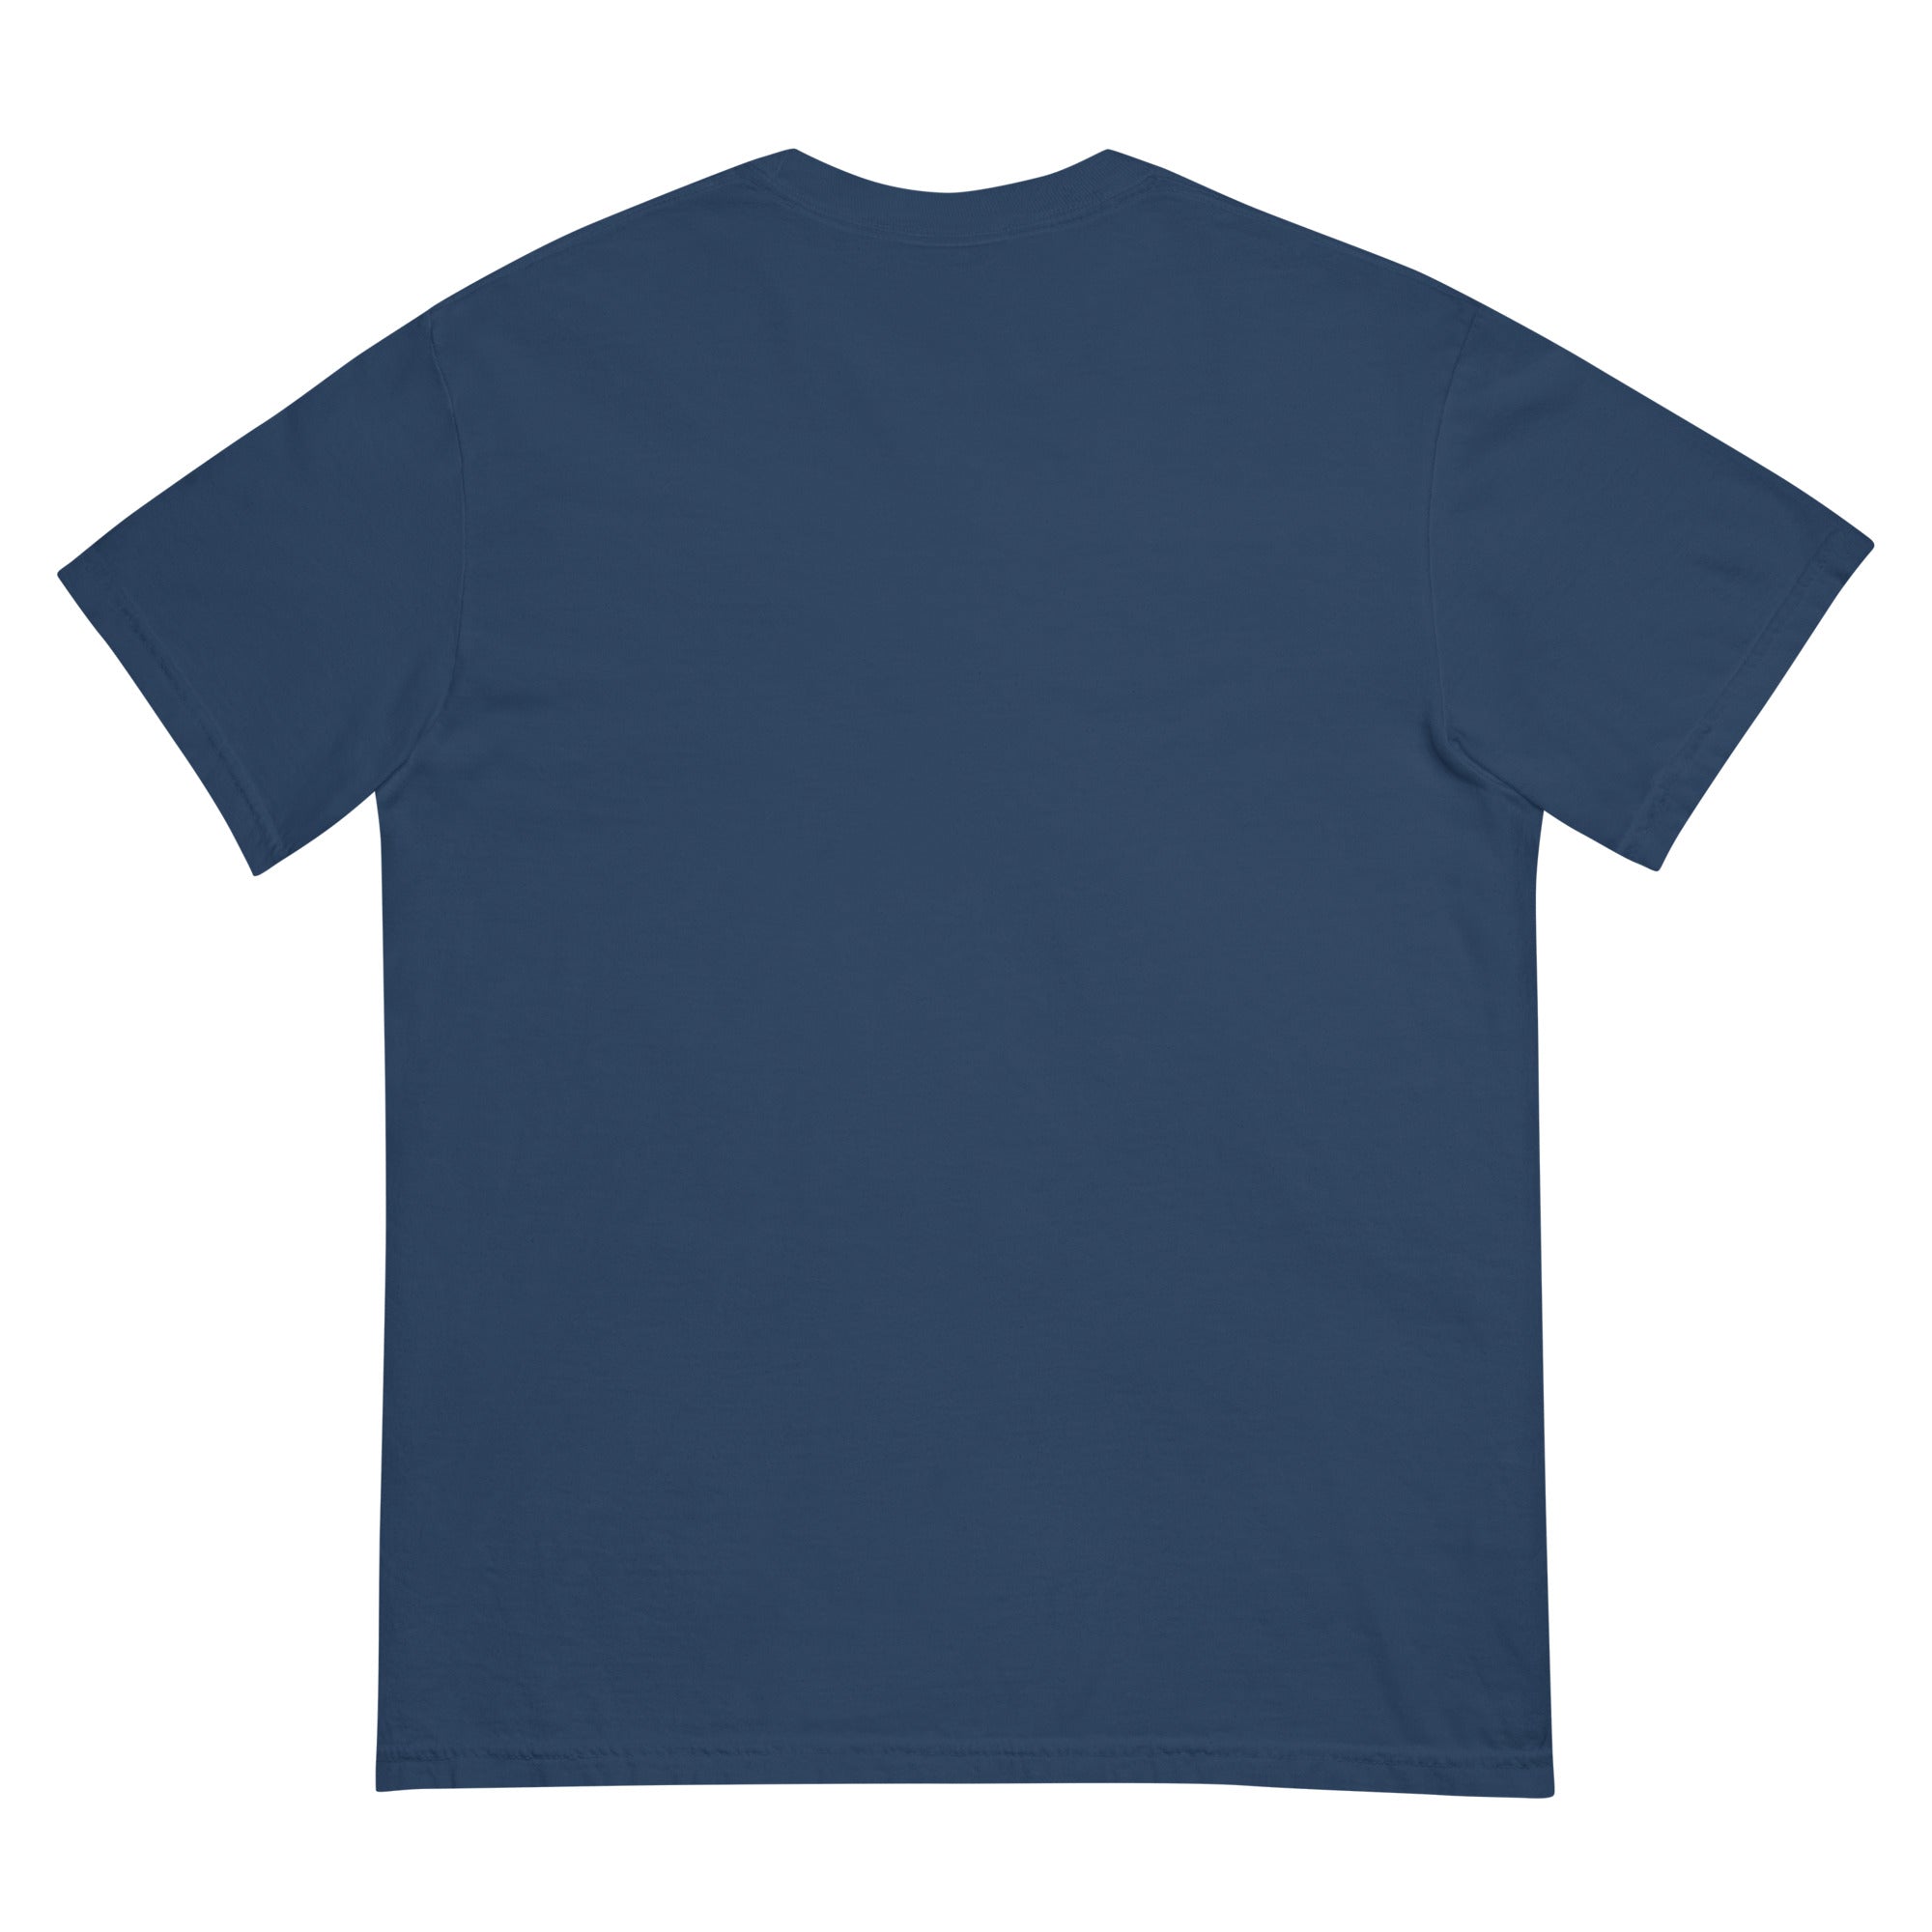 Ron Paul 1988 Campaign Garment-dyed Heavyweight T-Shirt